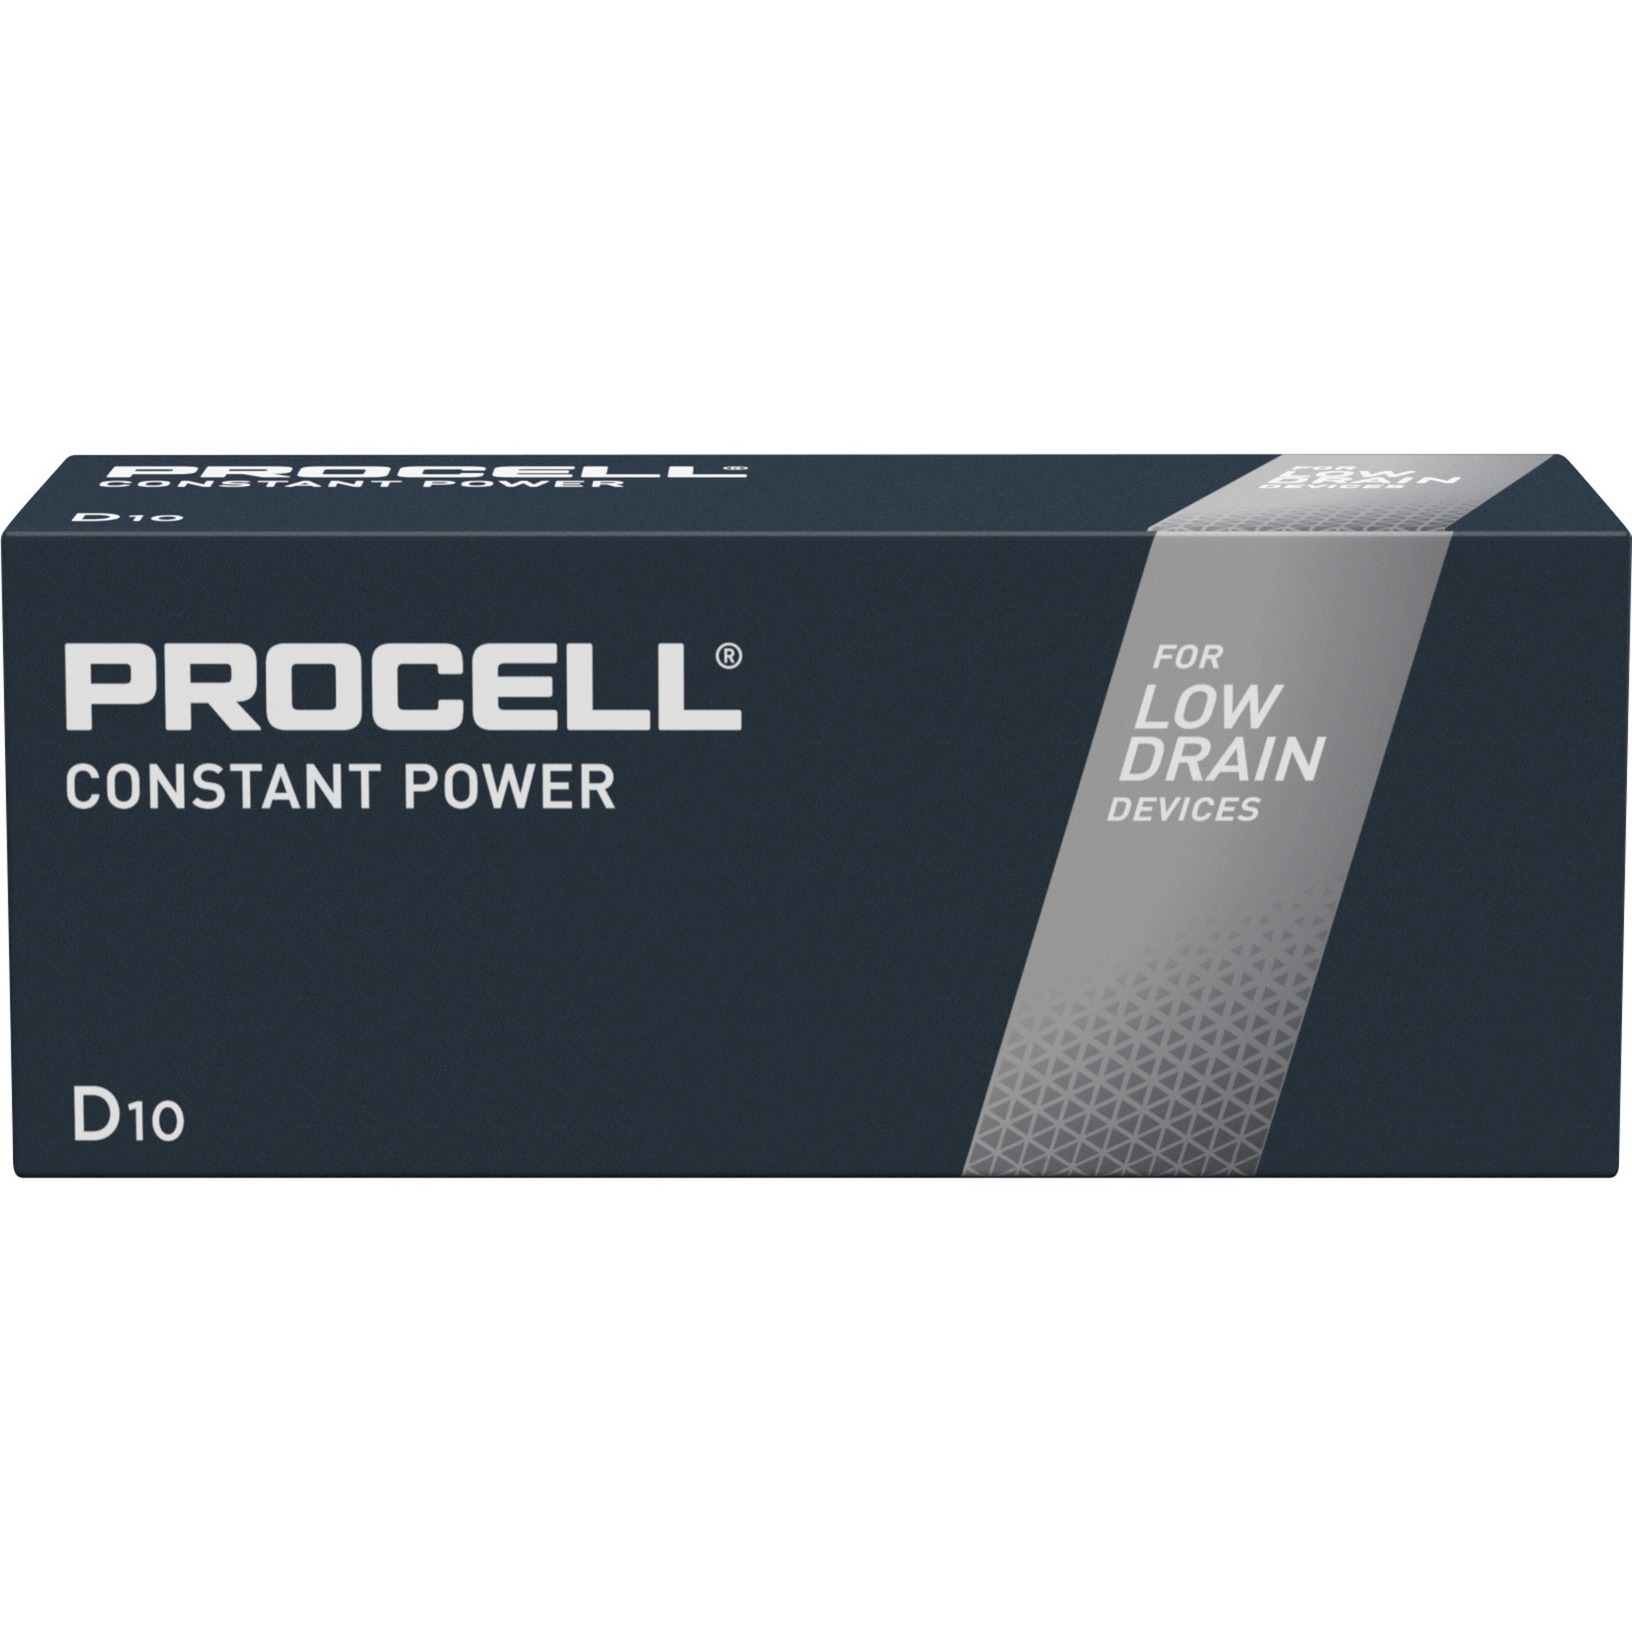 Procell Alkaline Intense Power D, 1,5V, Batterie von Duracell